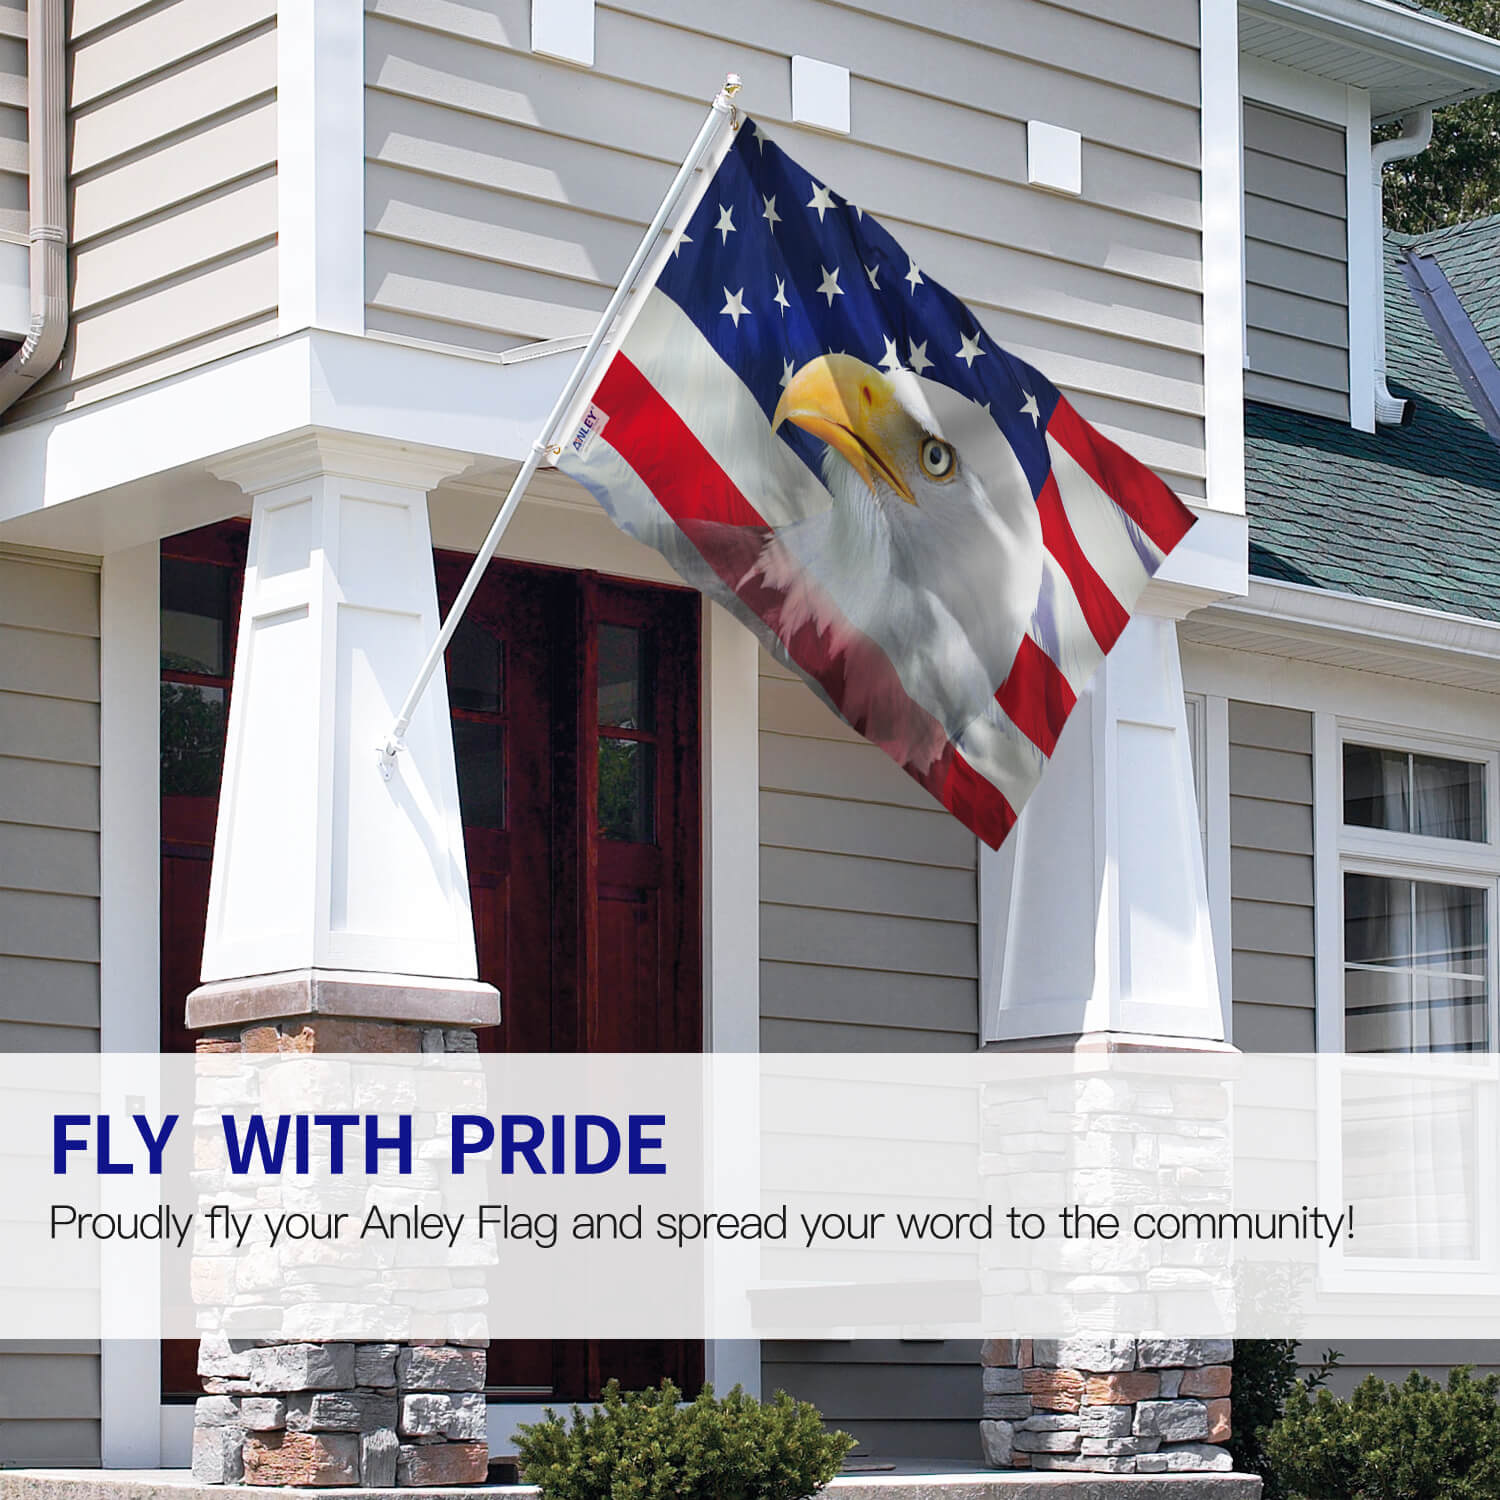 Fly Breeze 3x5 Foot US Bald Eagle Flag